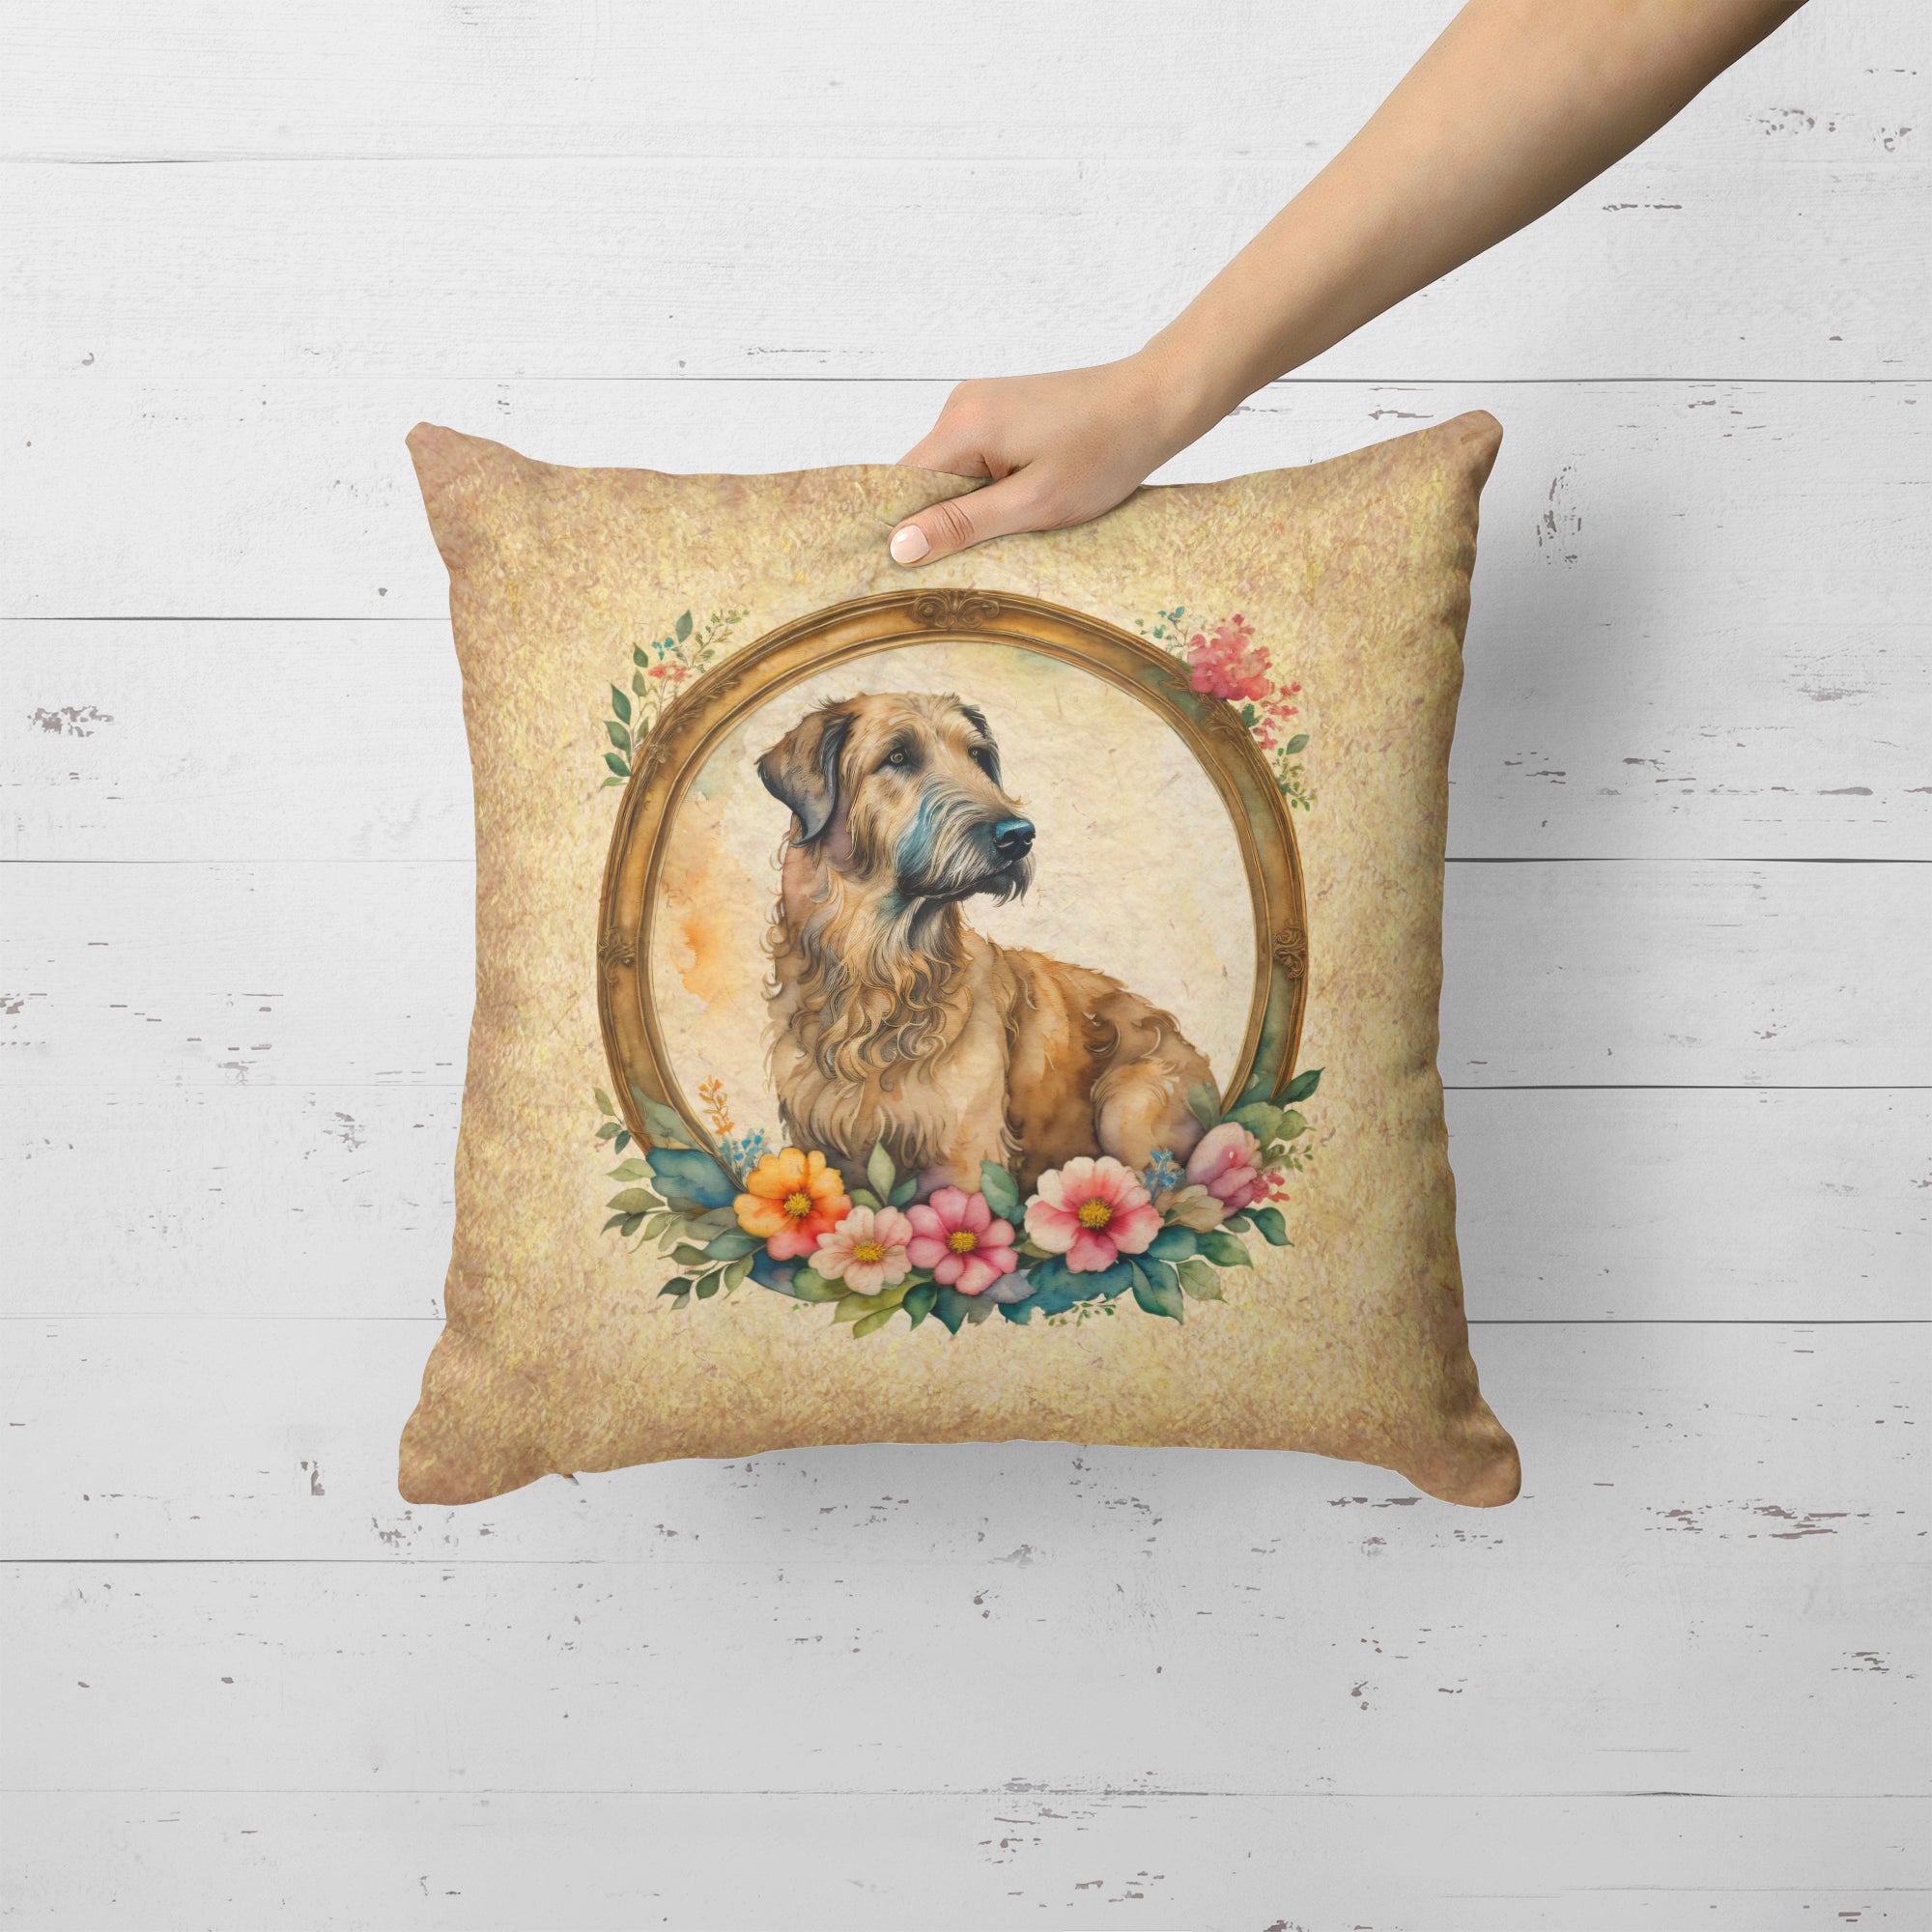 Buy this Irish Wolfhound and Flowers Fabric Decorative Pillow